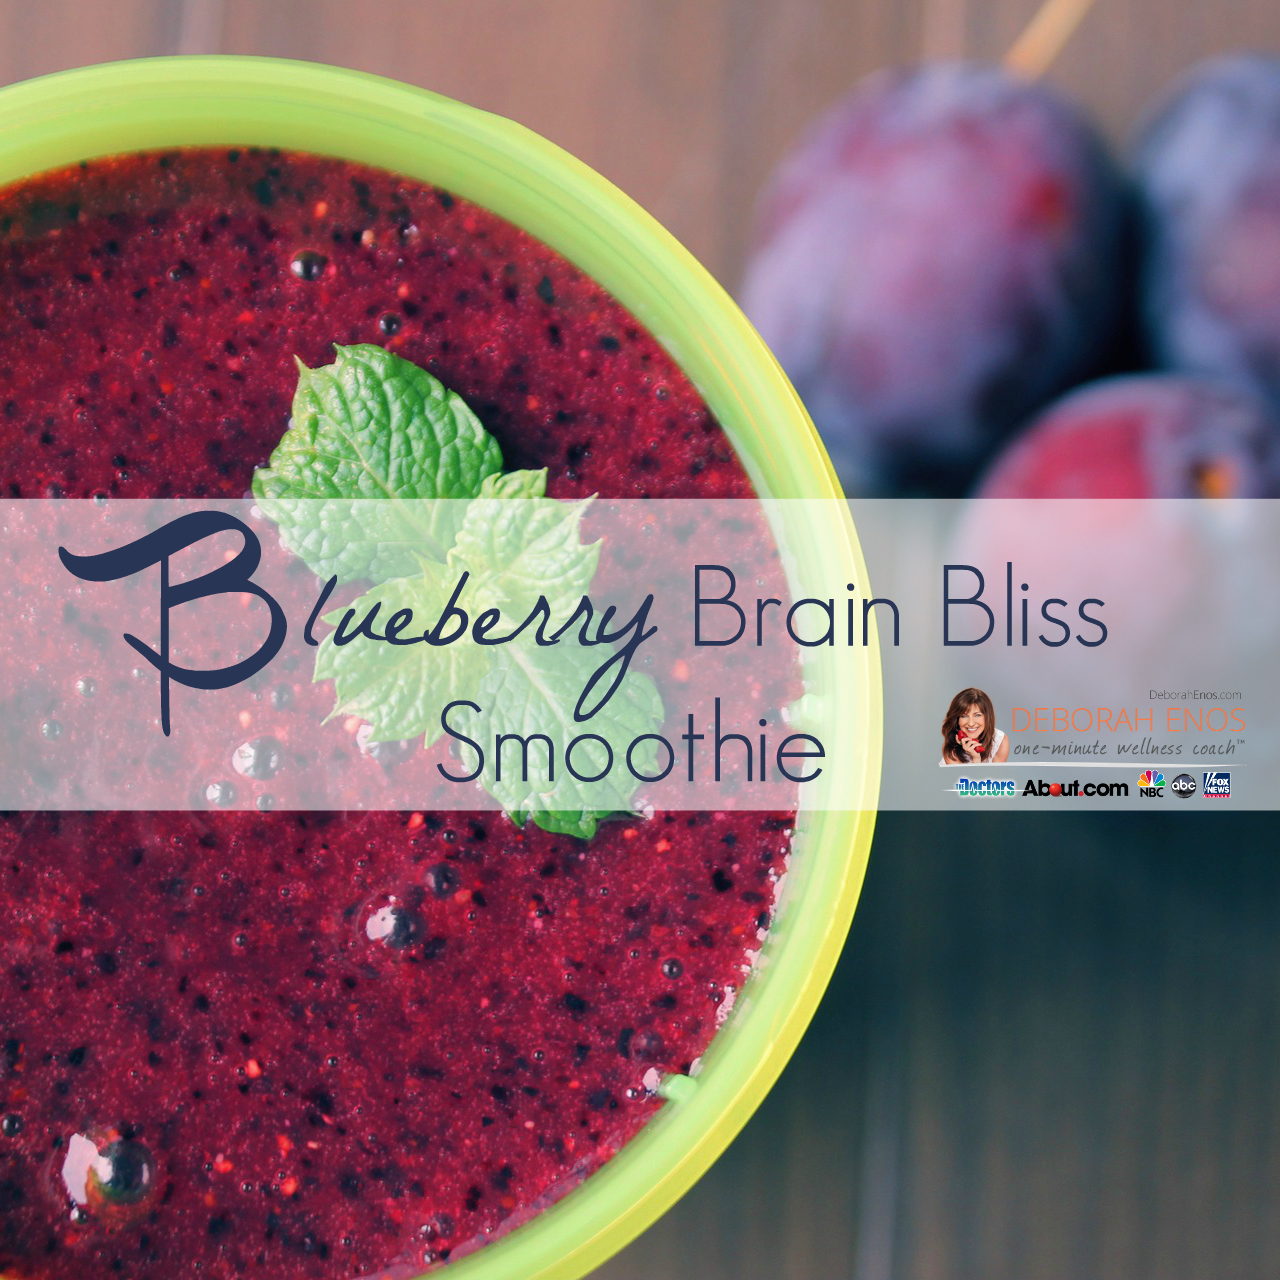 Blueberry brain bliss smoothie deborah enos